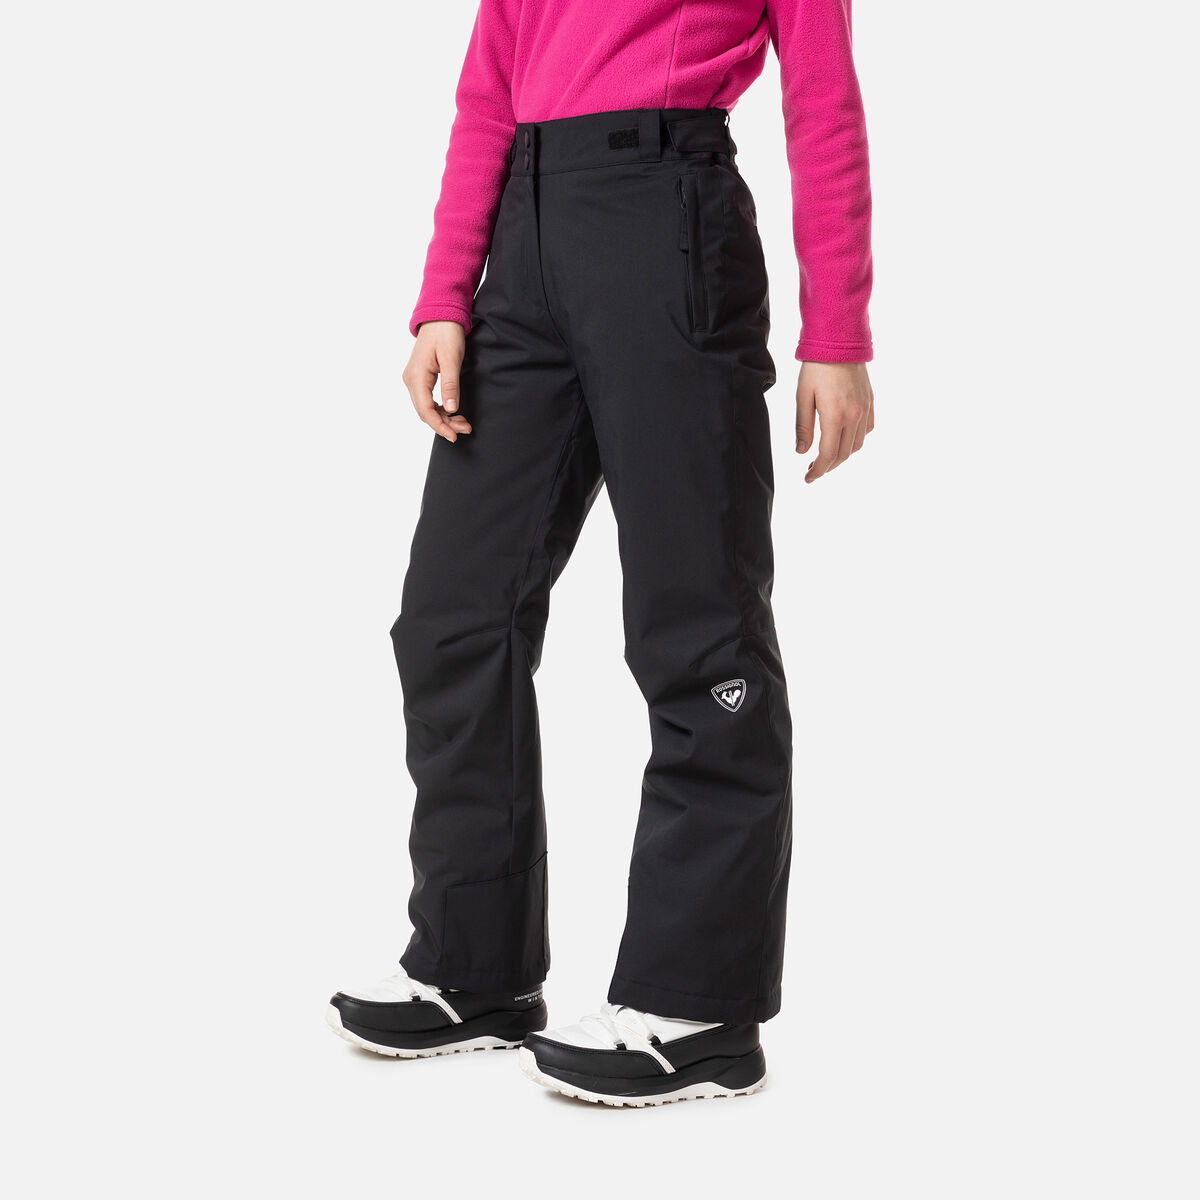 Rossignol Black Ski Pant for Girls at Sporting Life